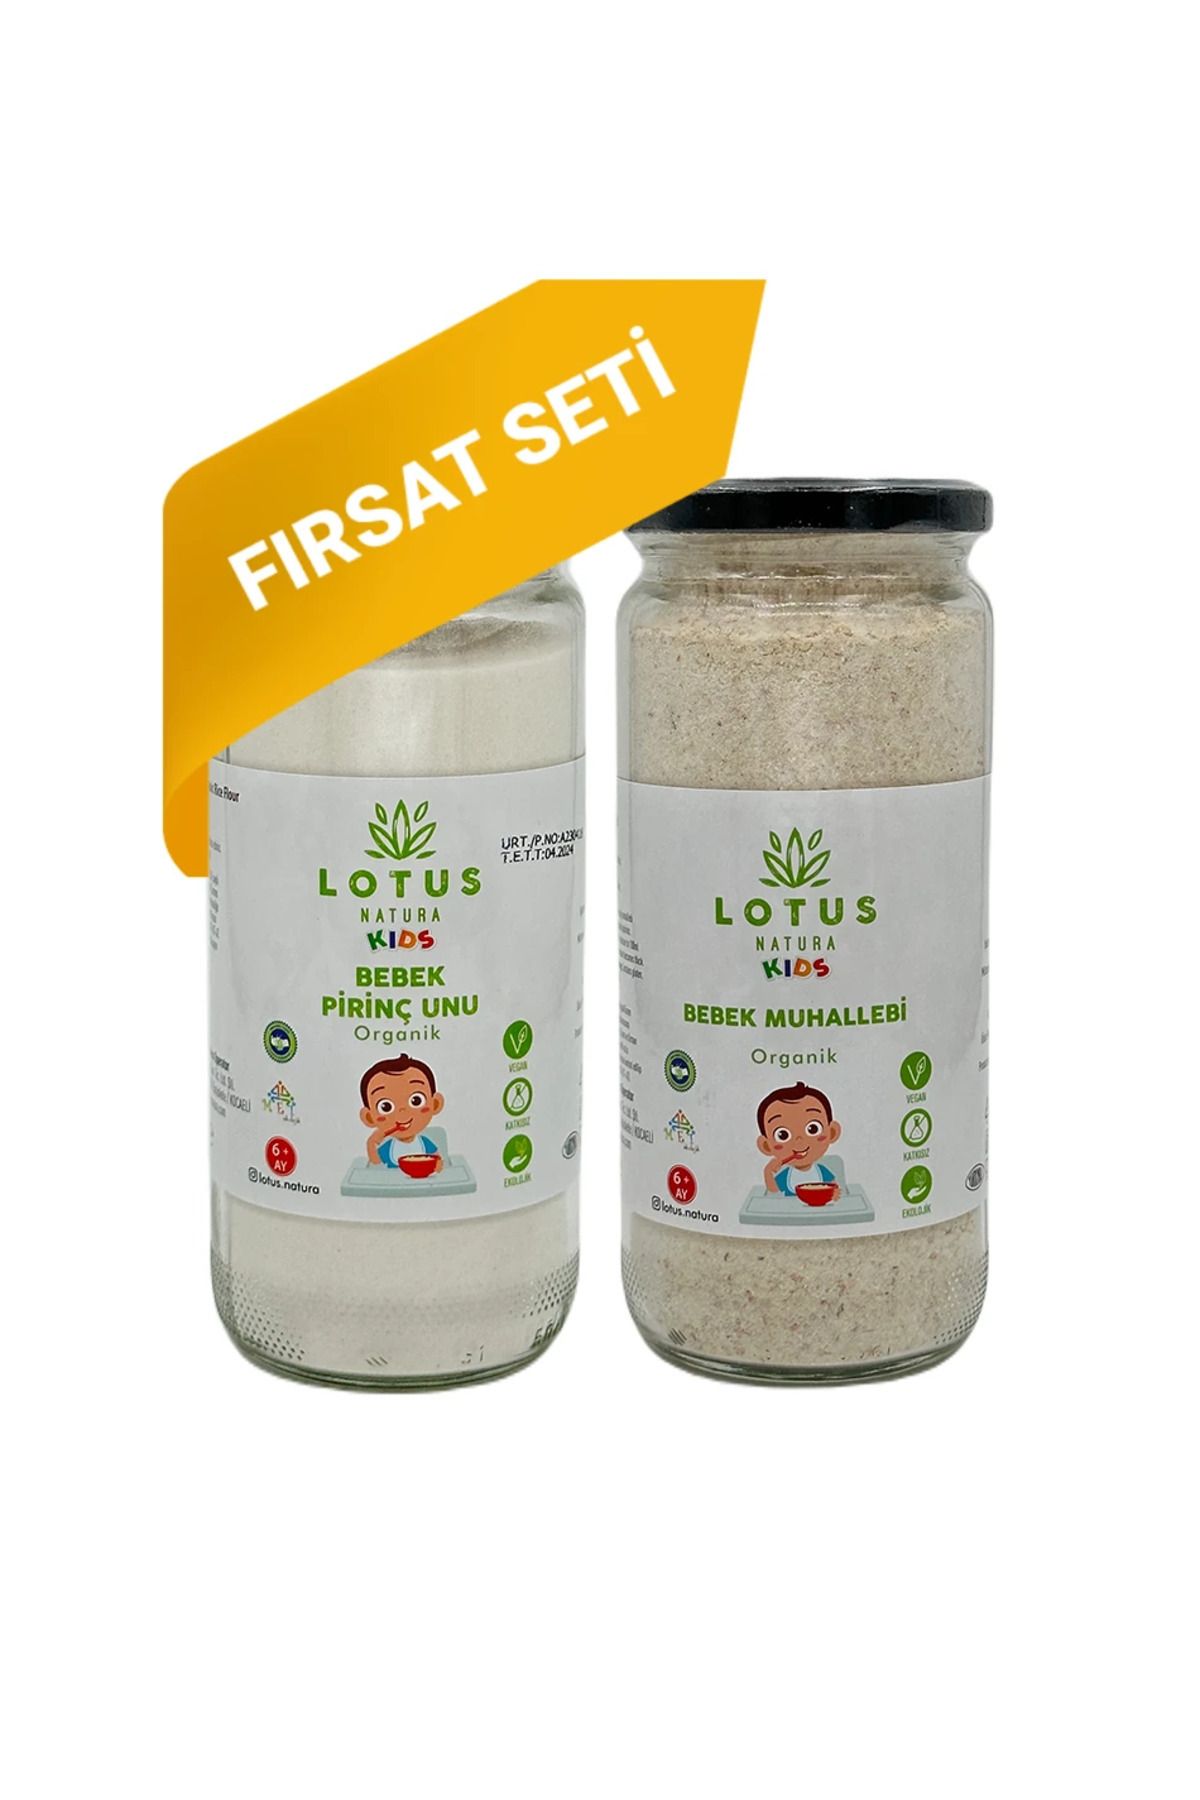 Lotus Natura Baby Organik Pirinç Unu-organik Bebek Muhallebisi Seti 6 Ay